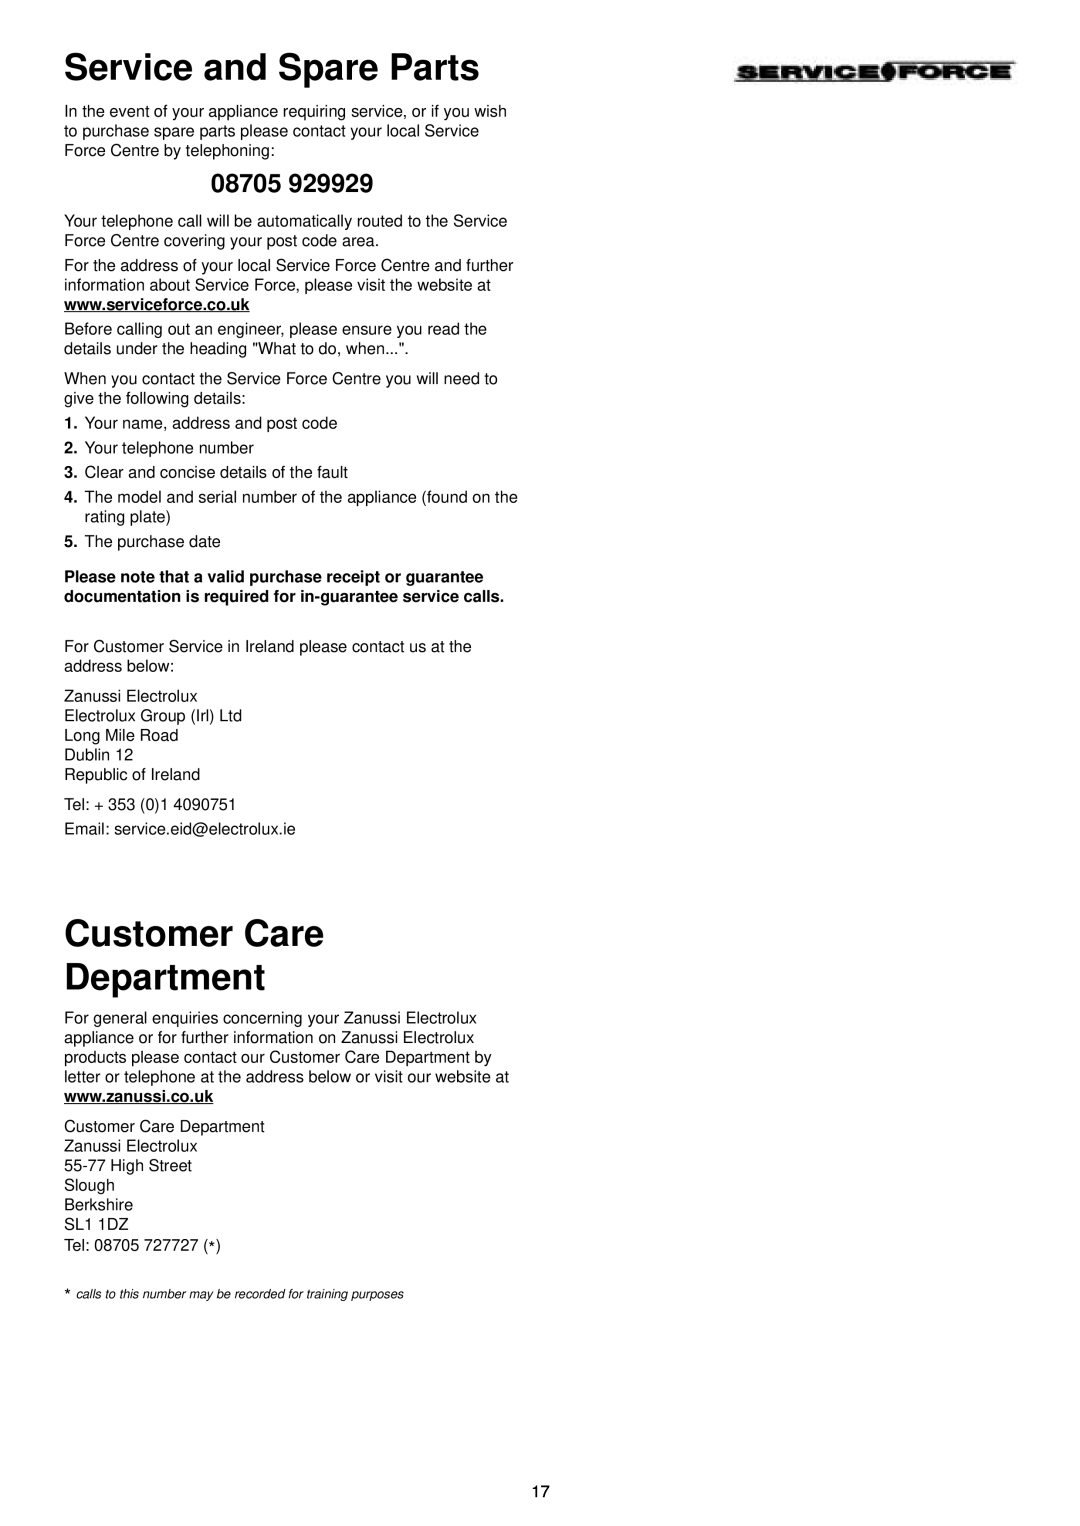 Zanussi DE 6554 manual Service and Spare Parts, Customer Care Department, 08705 